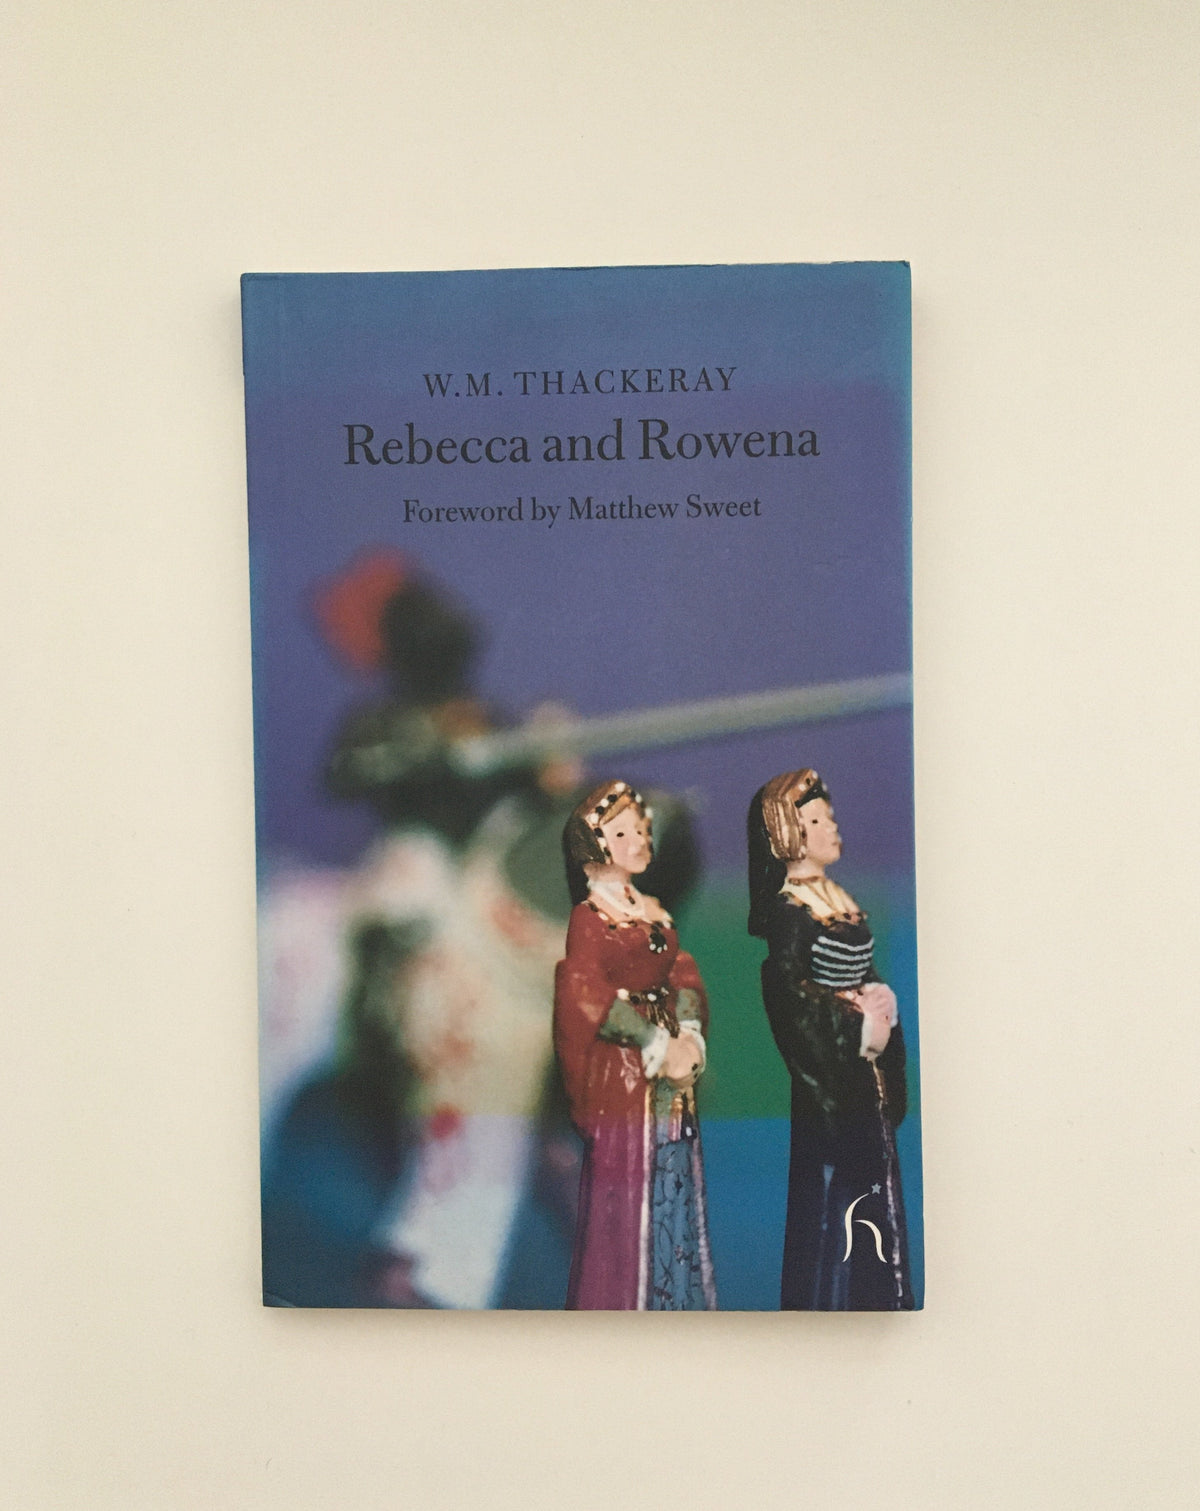 Rebecca and Rowena by W.M. Thackeray